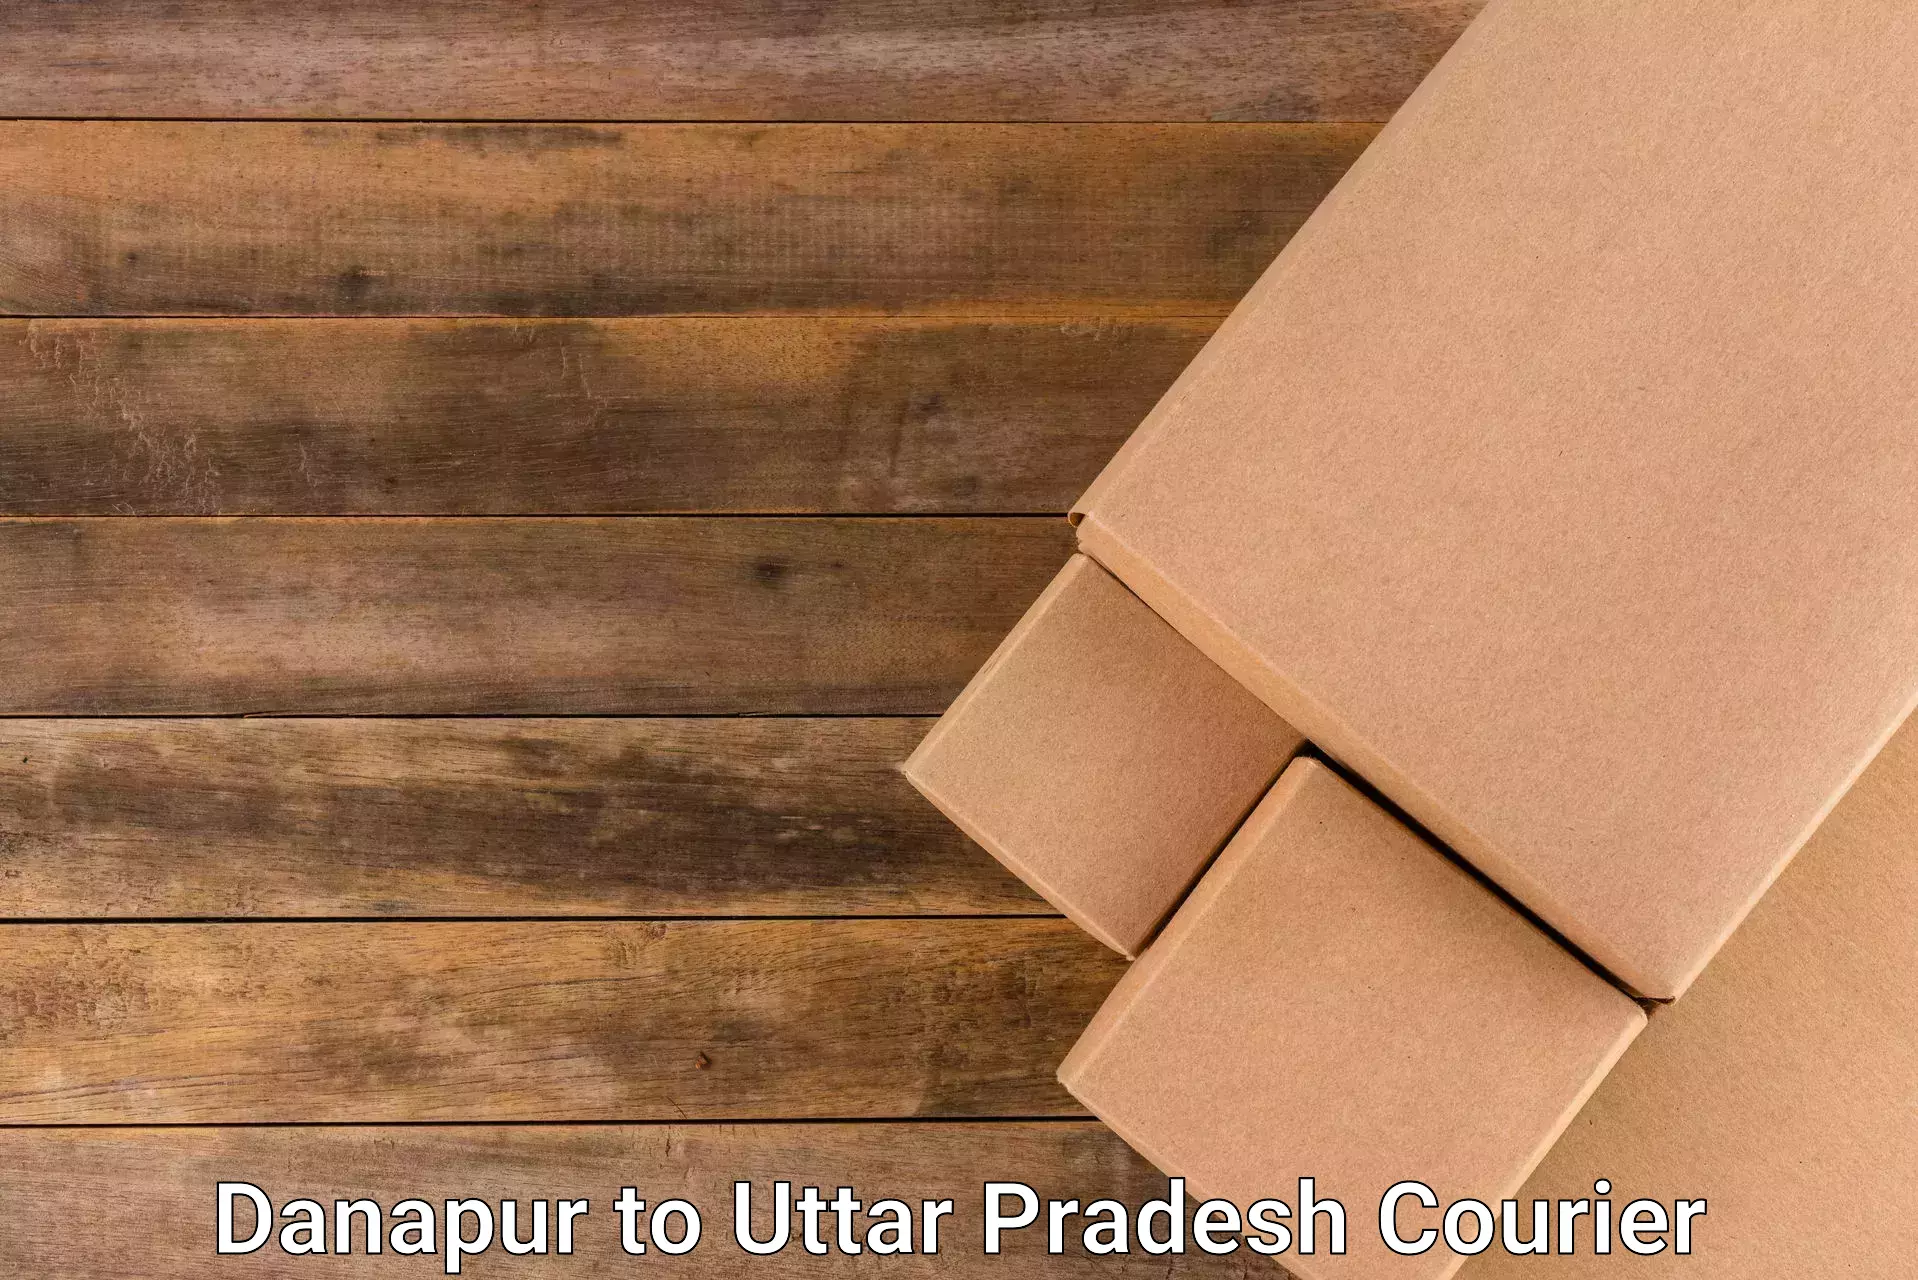 Courier services in Danapur to Uttar Pradesh